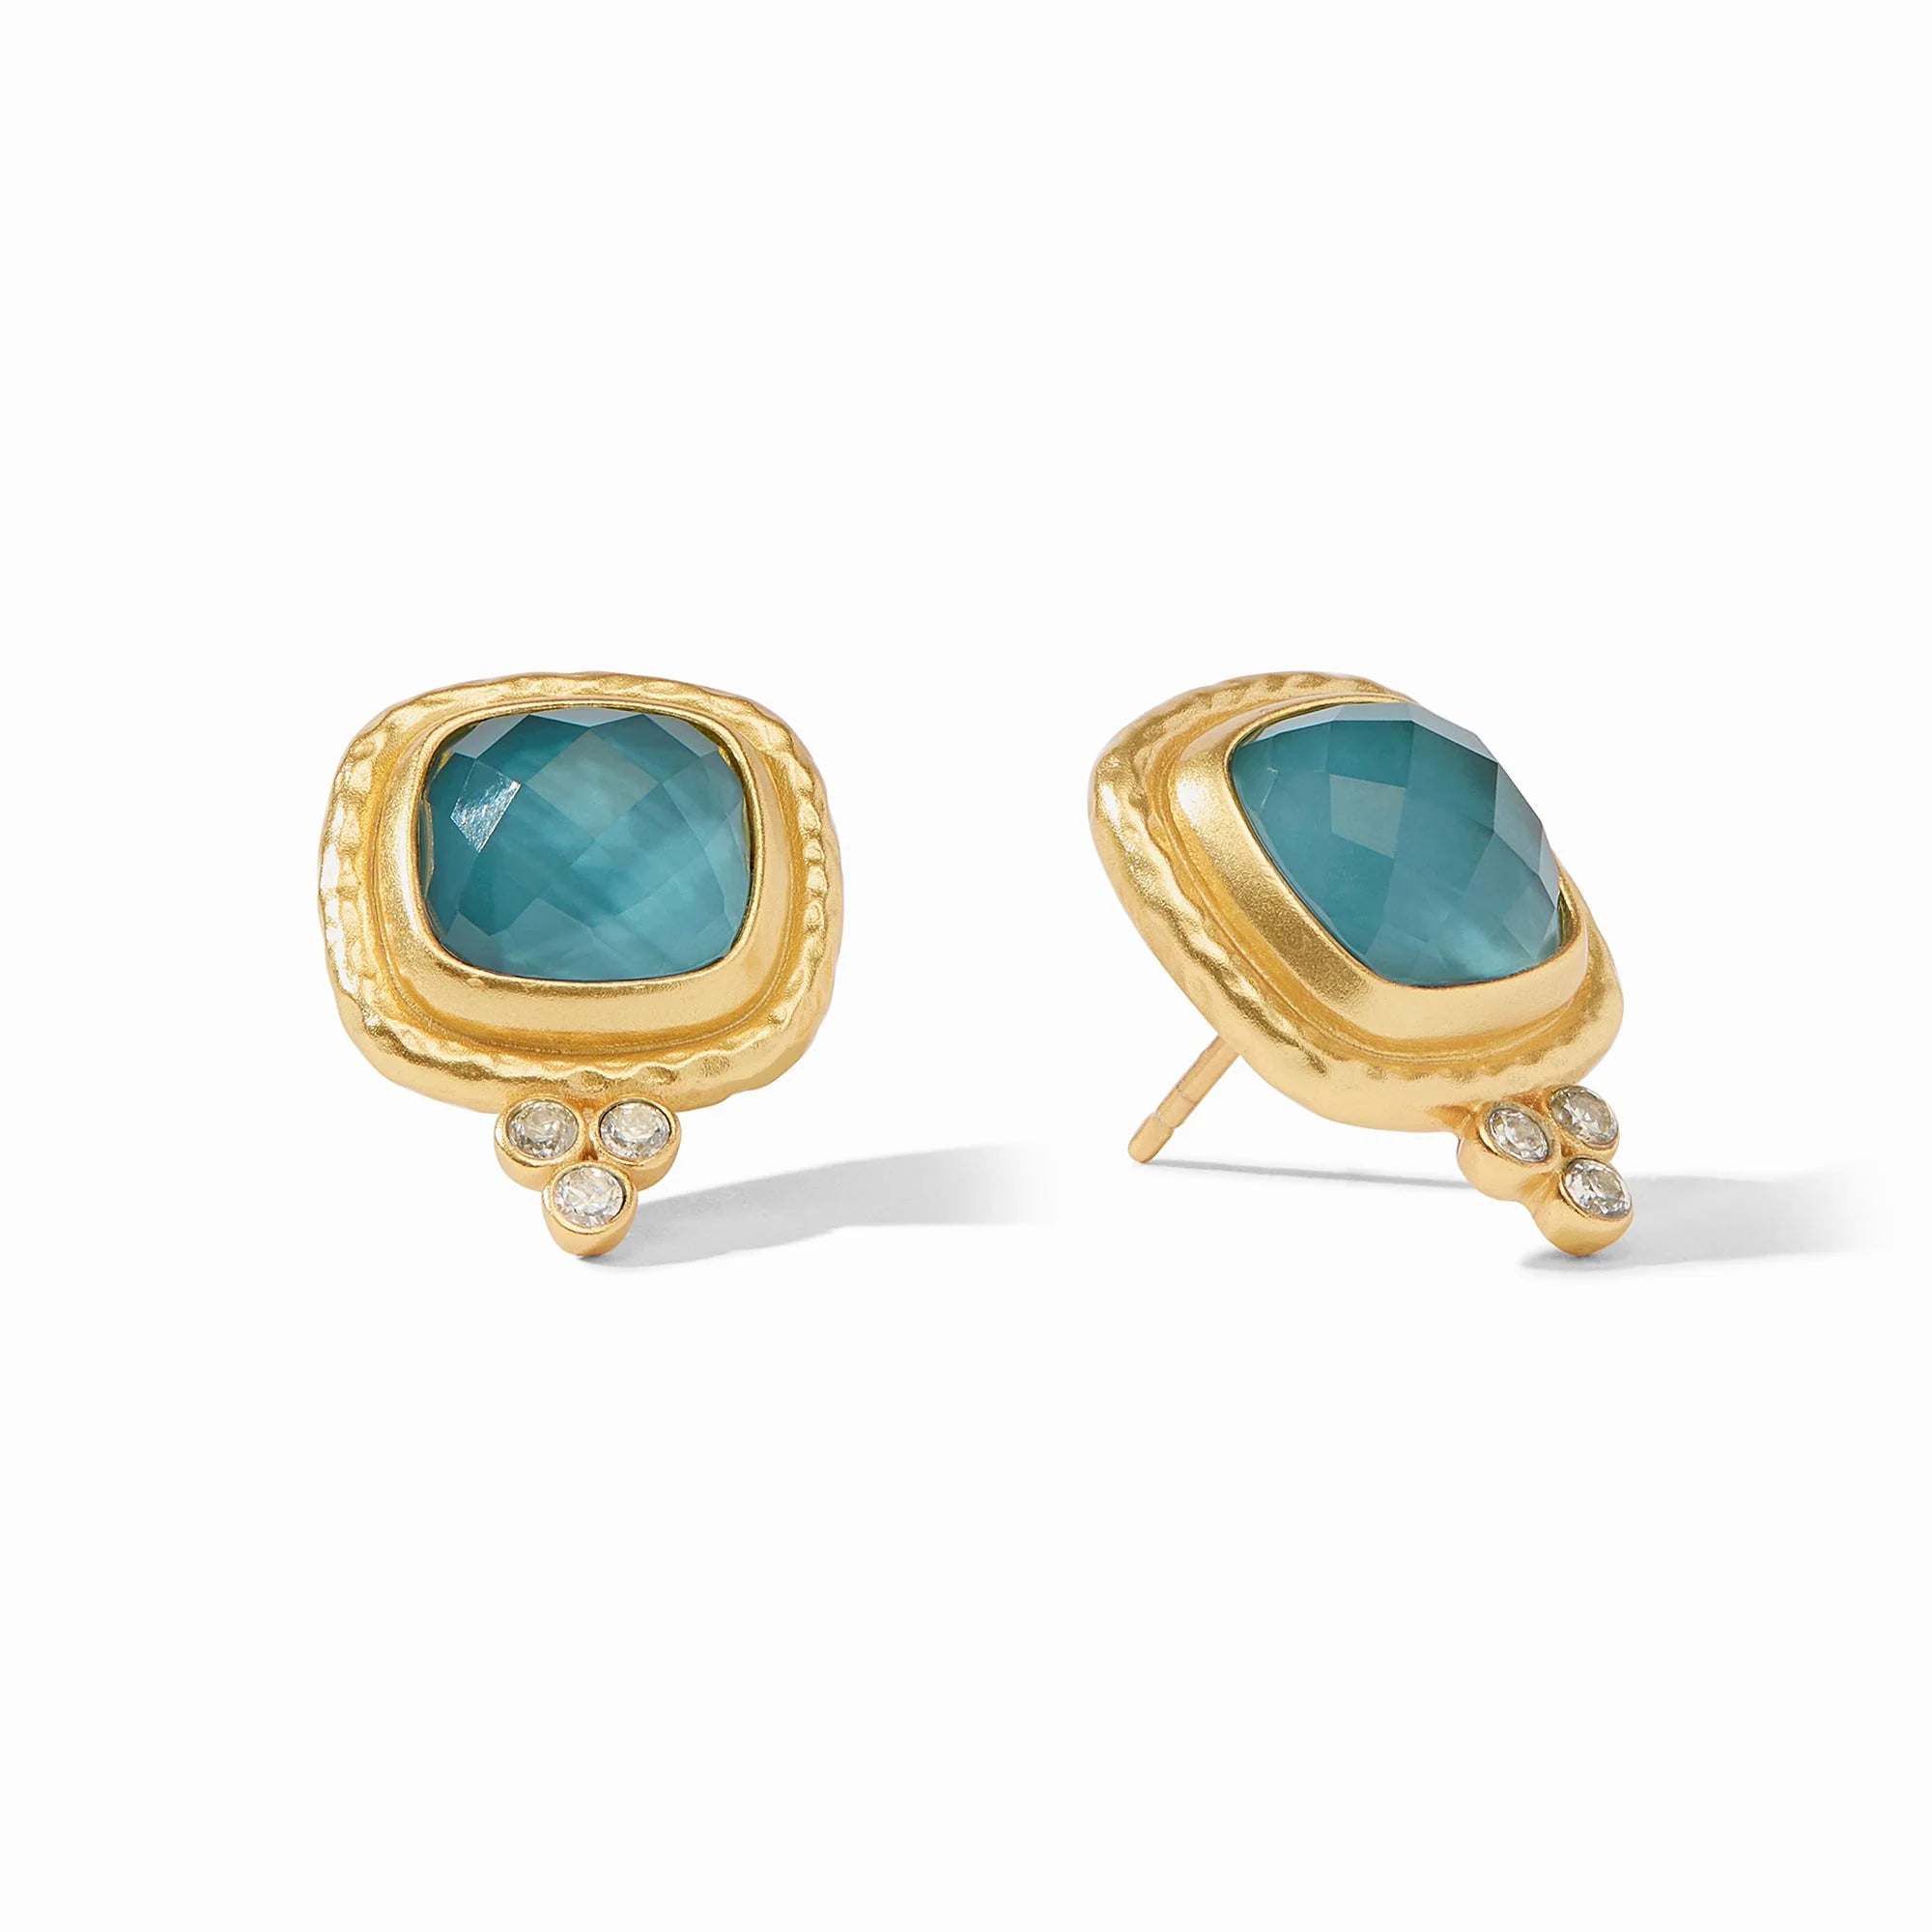 Julie Vos Tudor Stud Earrings - (two colors)